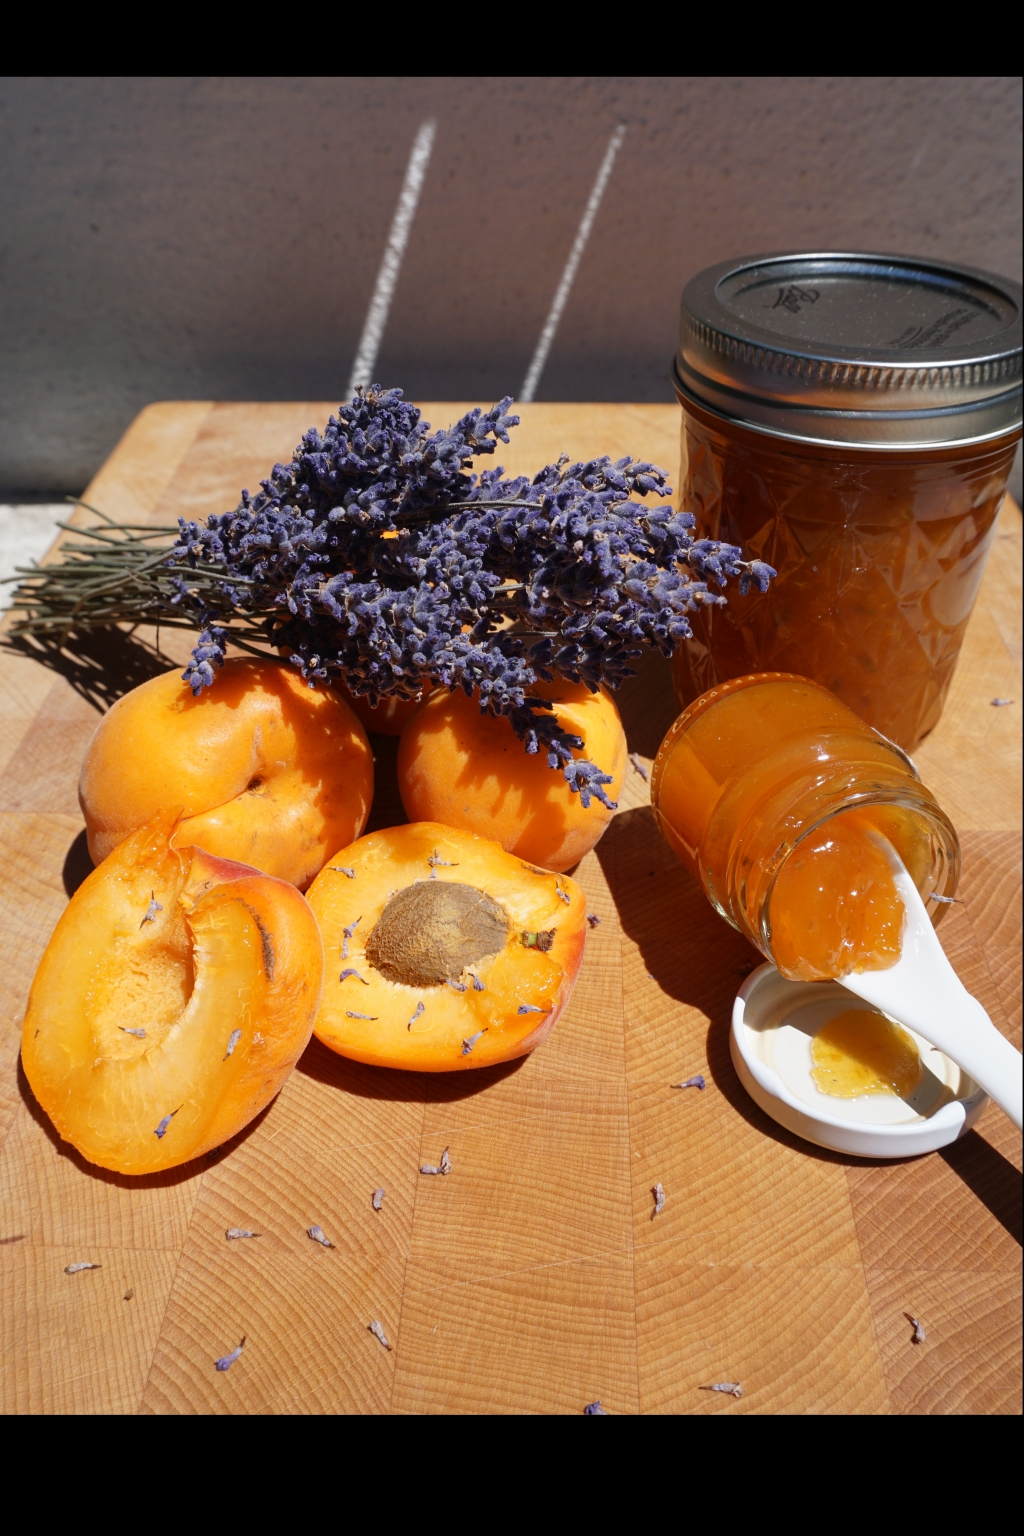 Aprikosenmarmelade Mit Lavendel — Rezepte Suchen